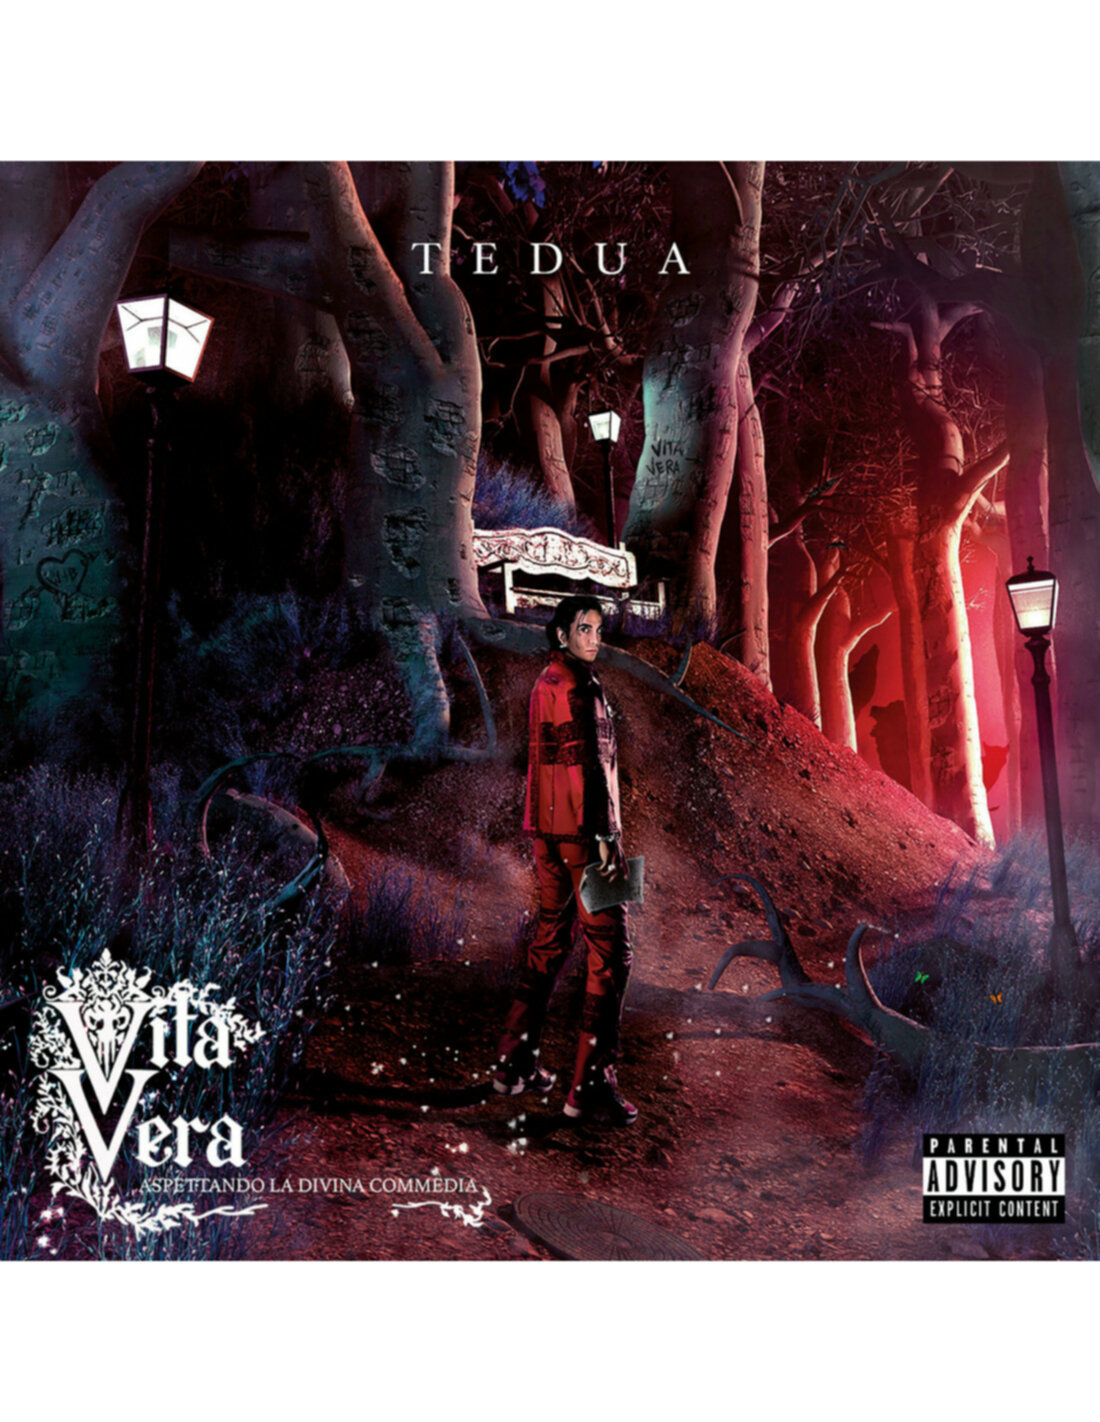 Tedua - Vita Vera - Mixtape, Aspettando La Divina Commedia (Red Edt.) - (CD)